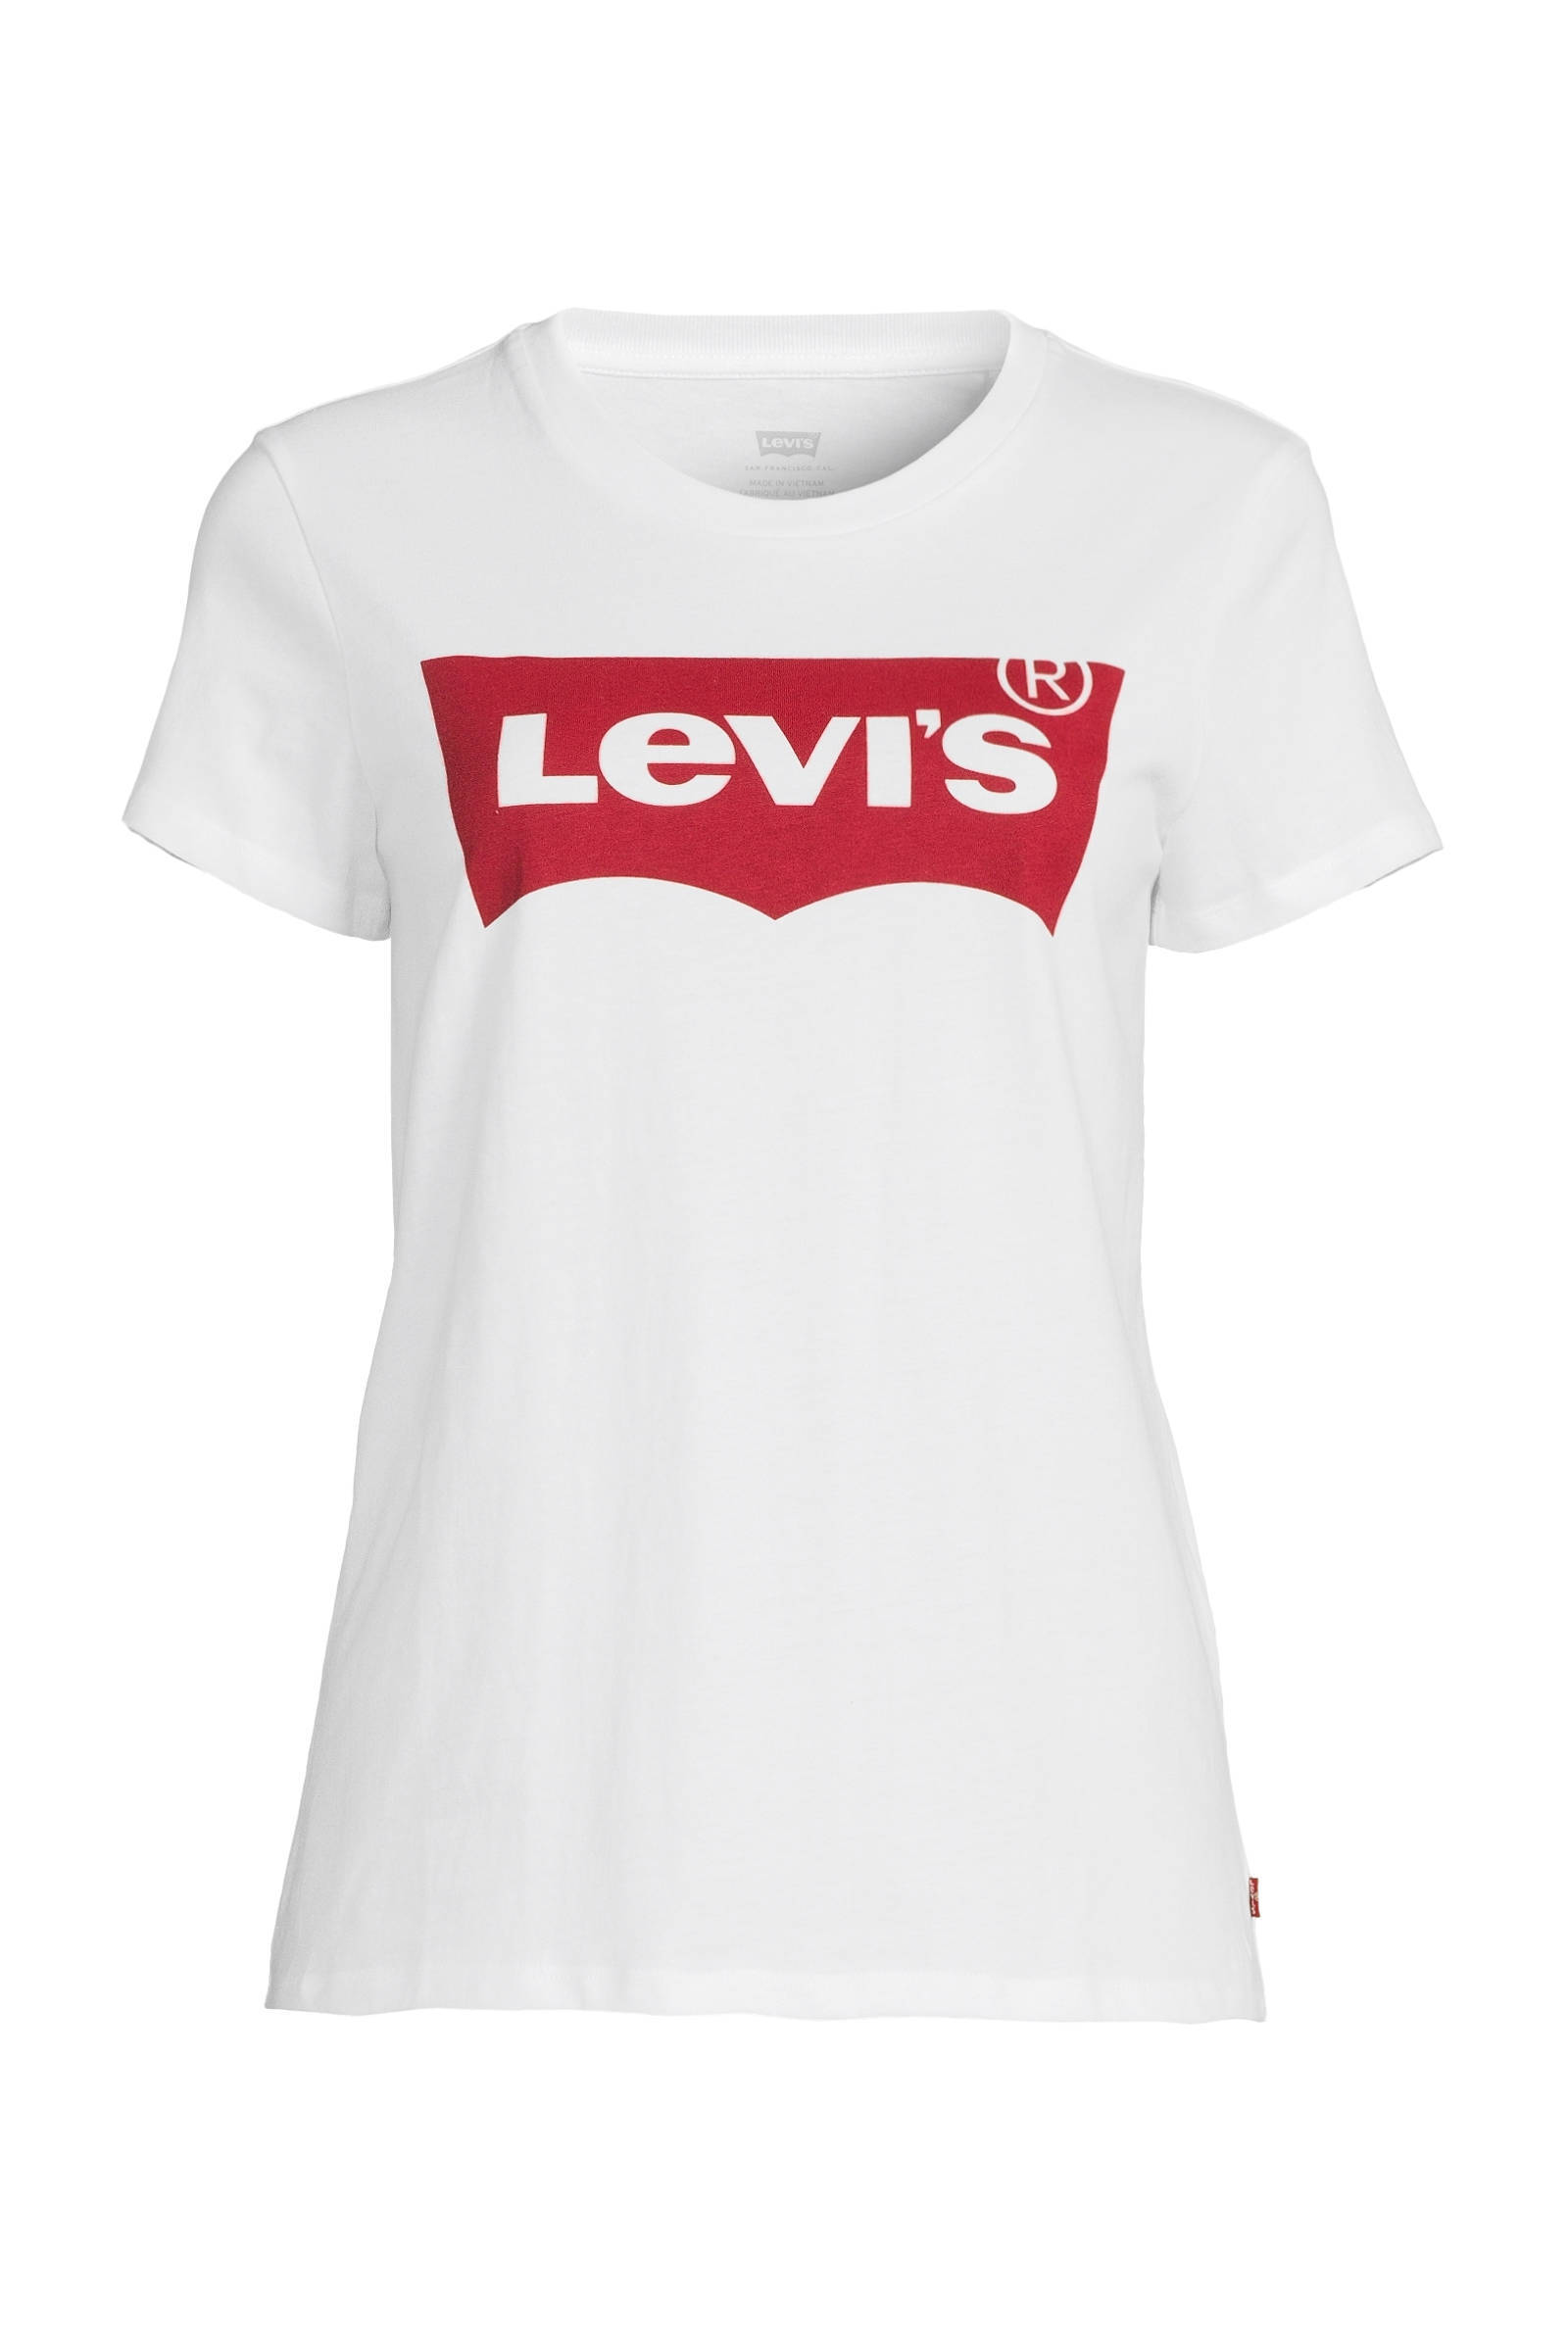 levis full t shirt